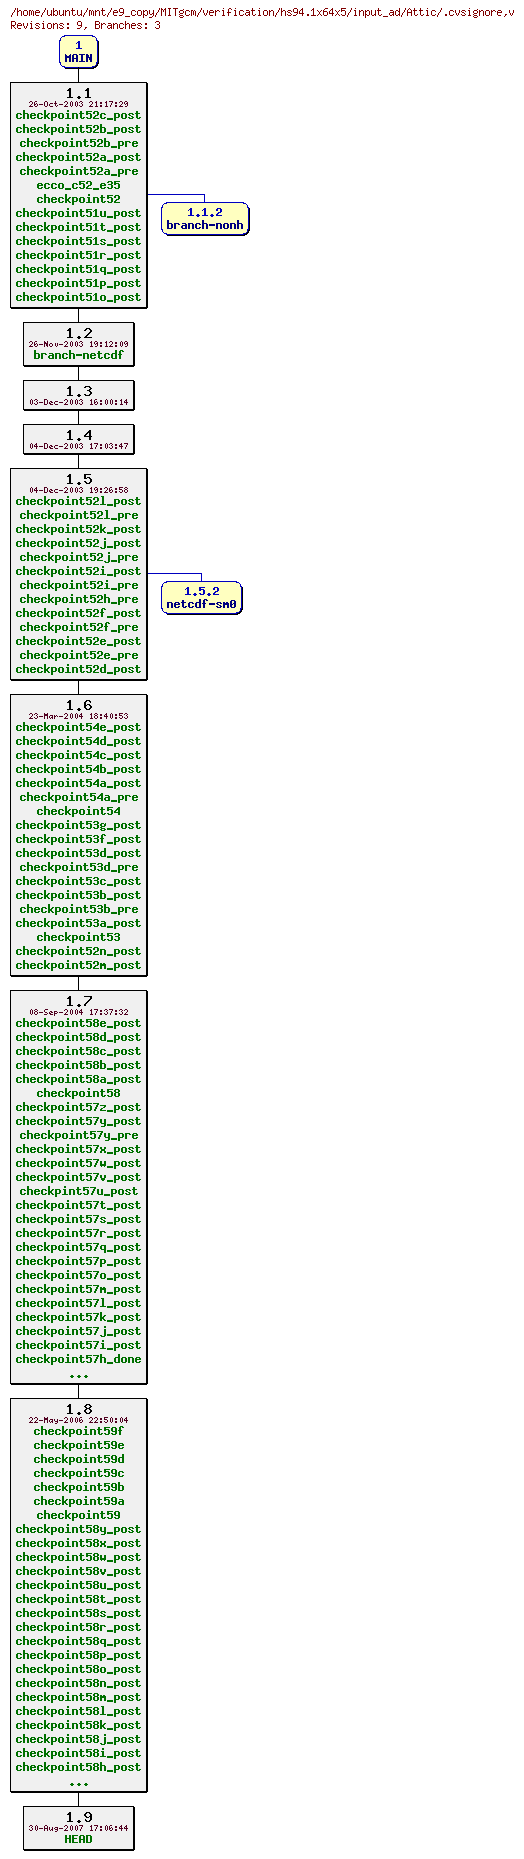 Revisions of MITgcm/verification/hs94.1x64x5/input_ad/.cvsignore